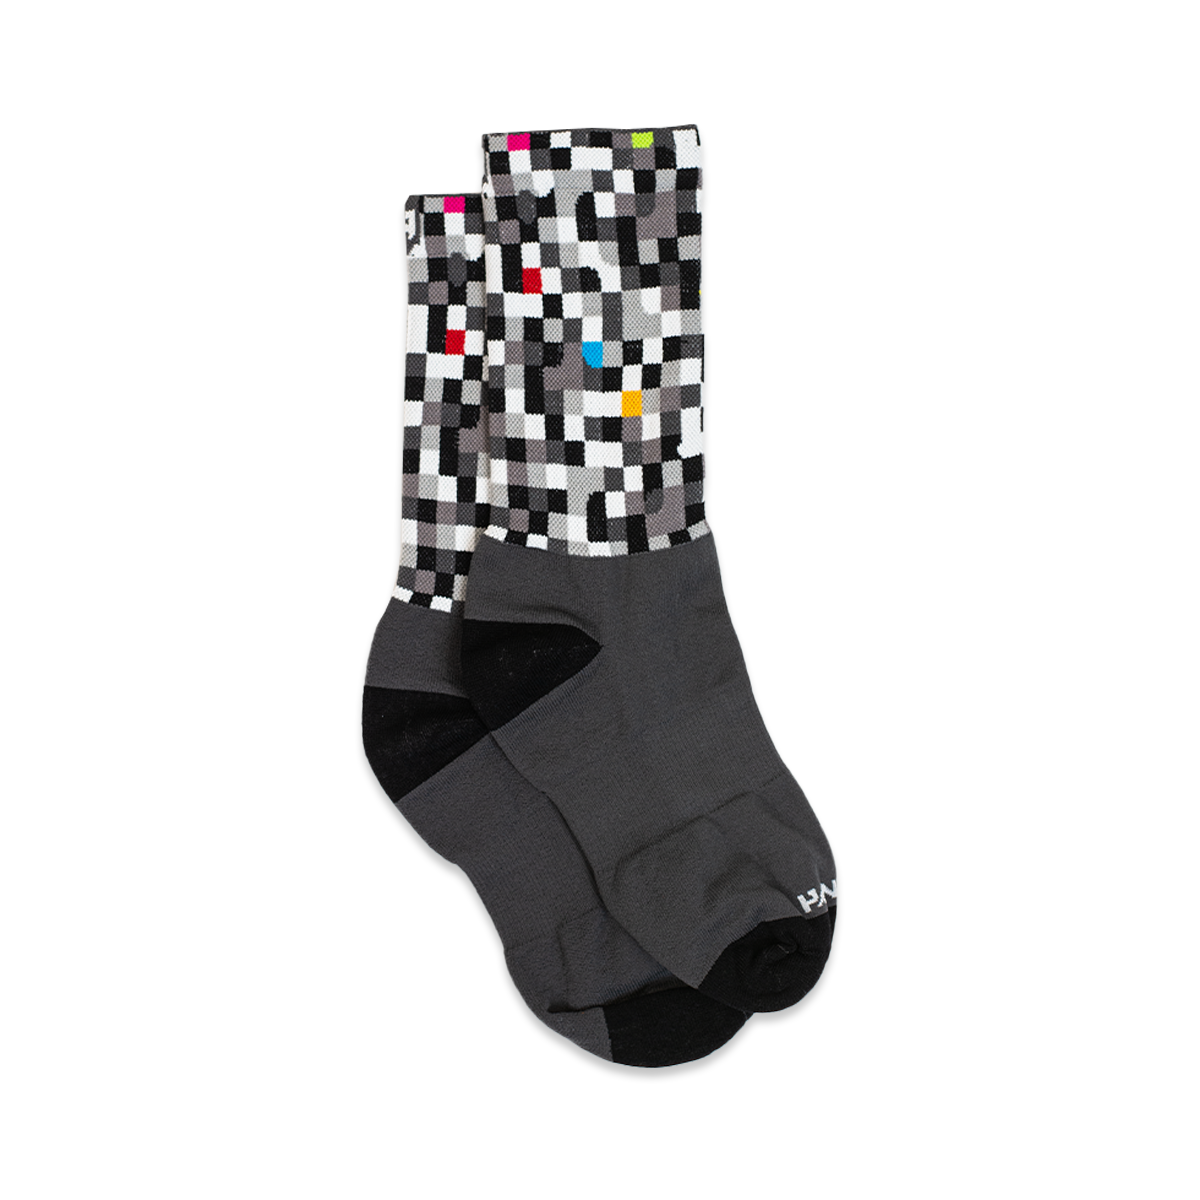 Socks - Pixelated